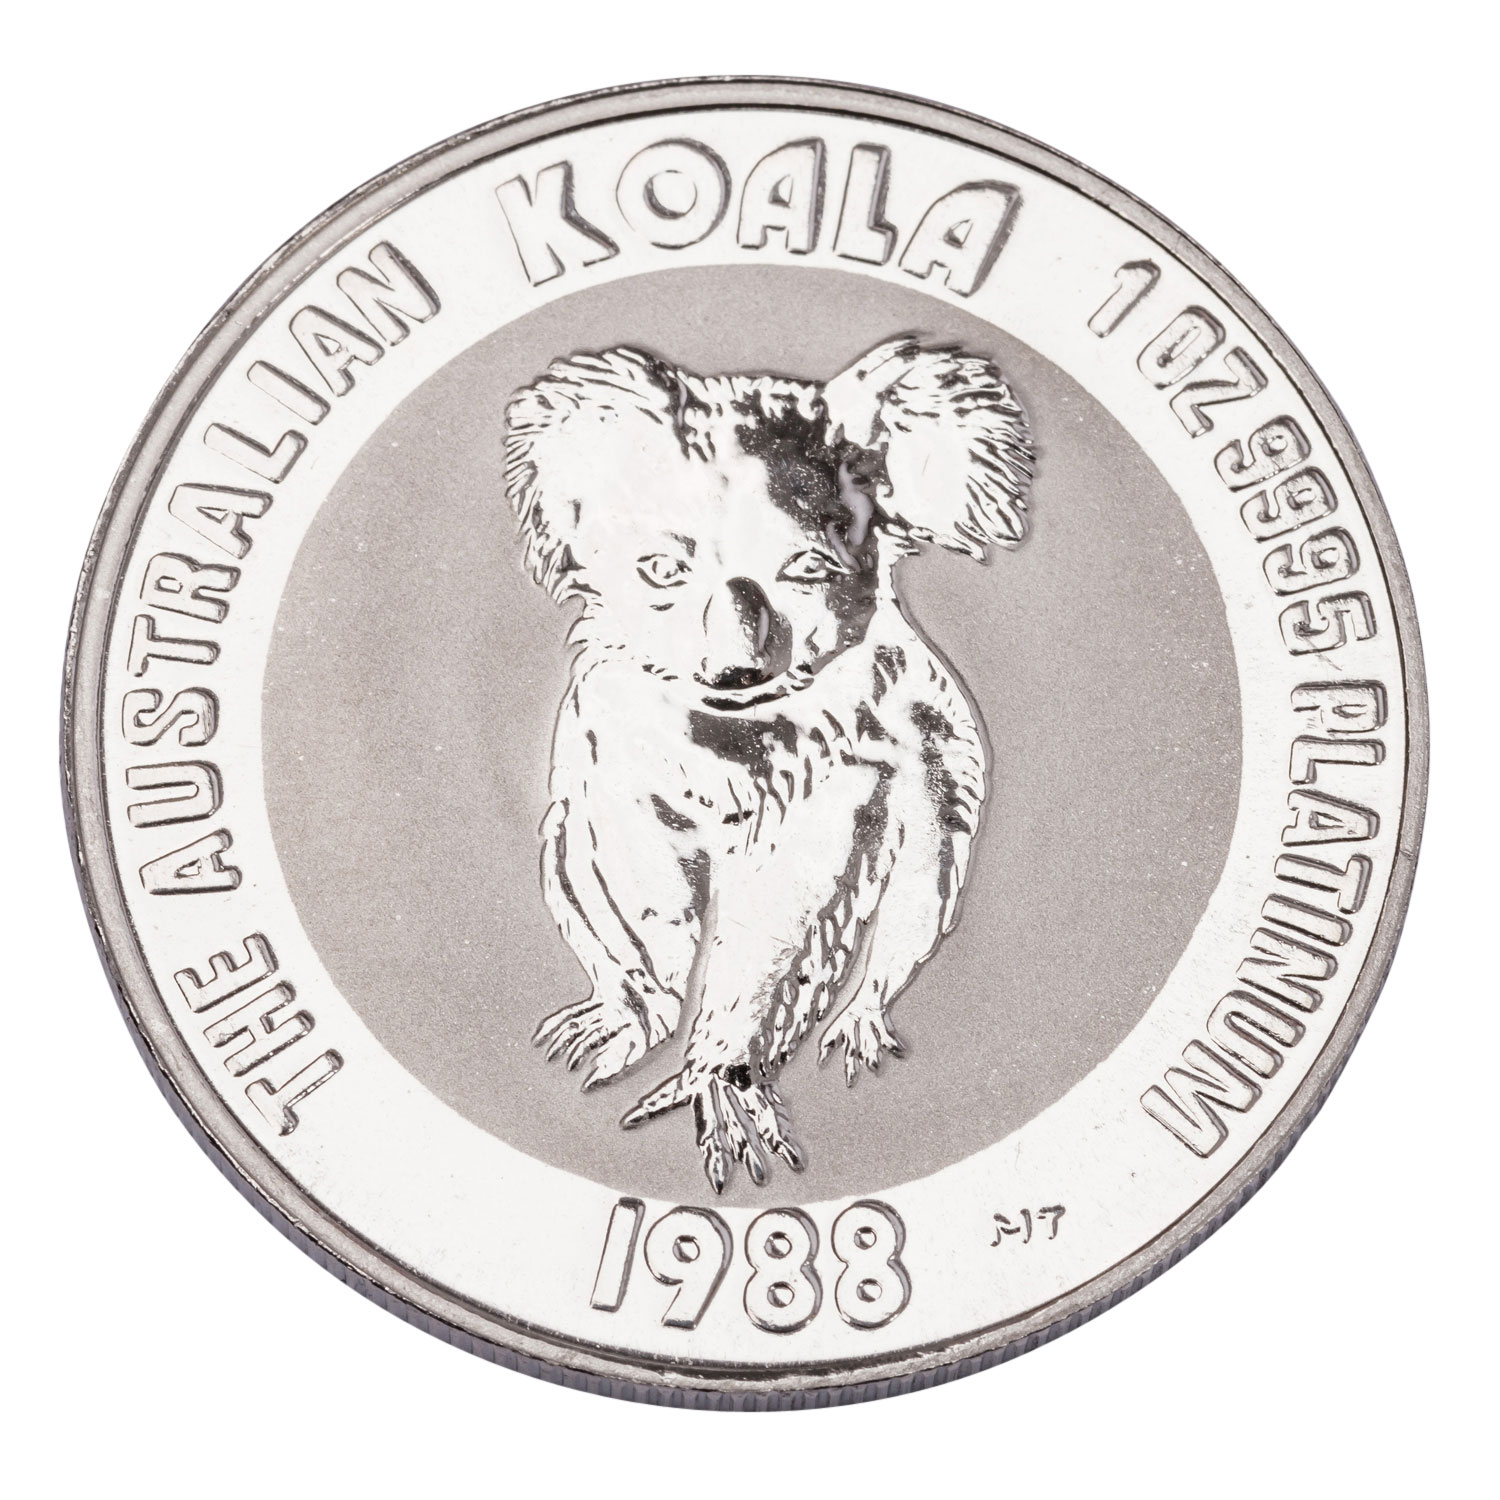 Australien - 100 Dollars 1988, The Australian Koala, - Image 2 of 2